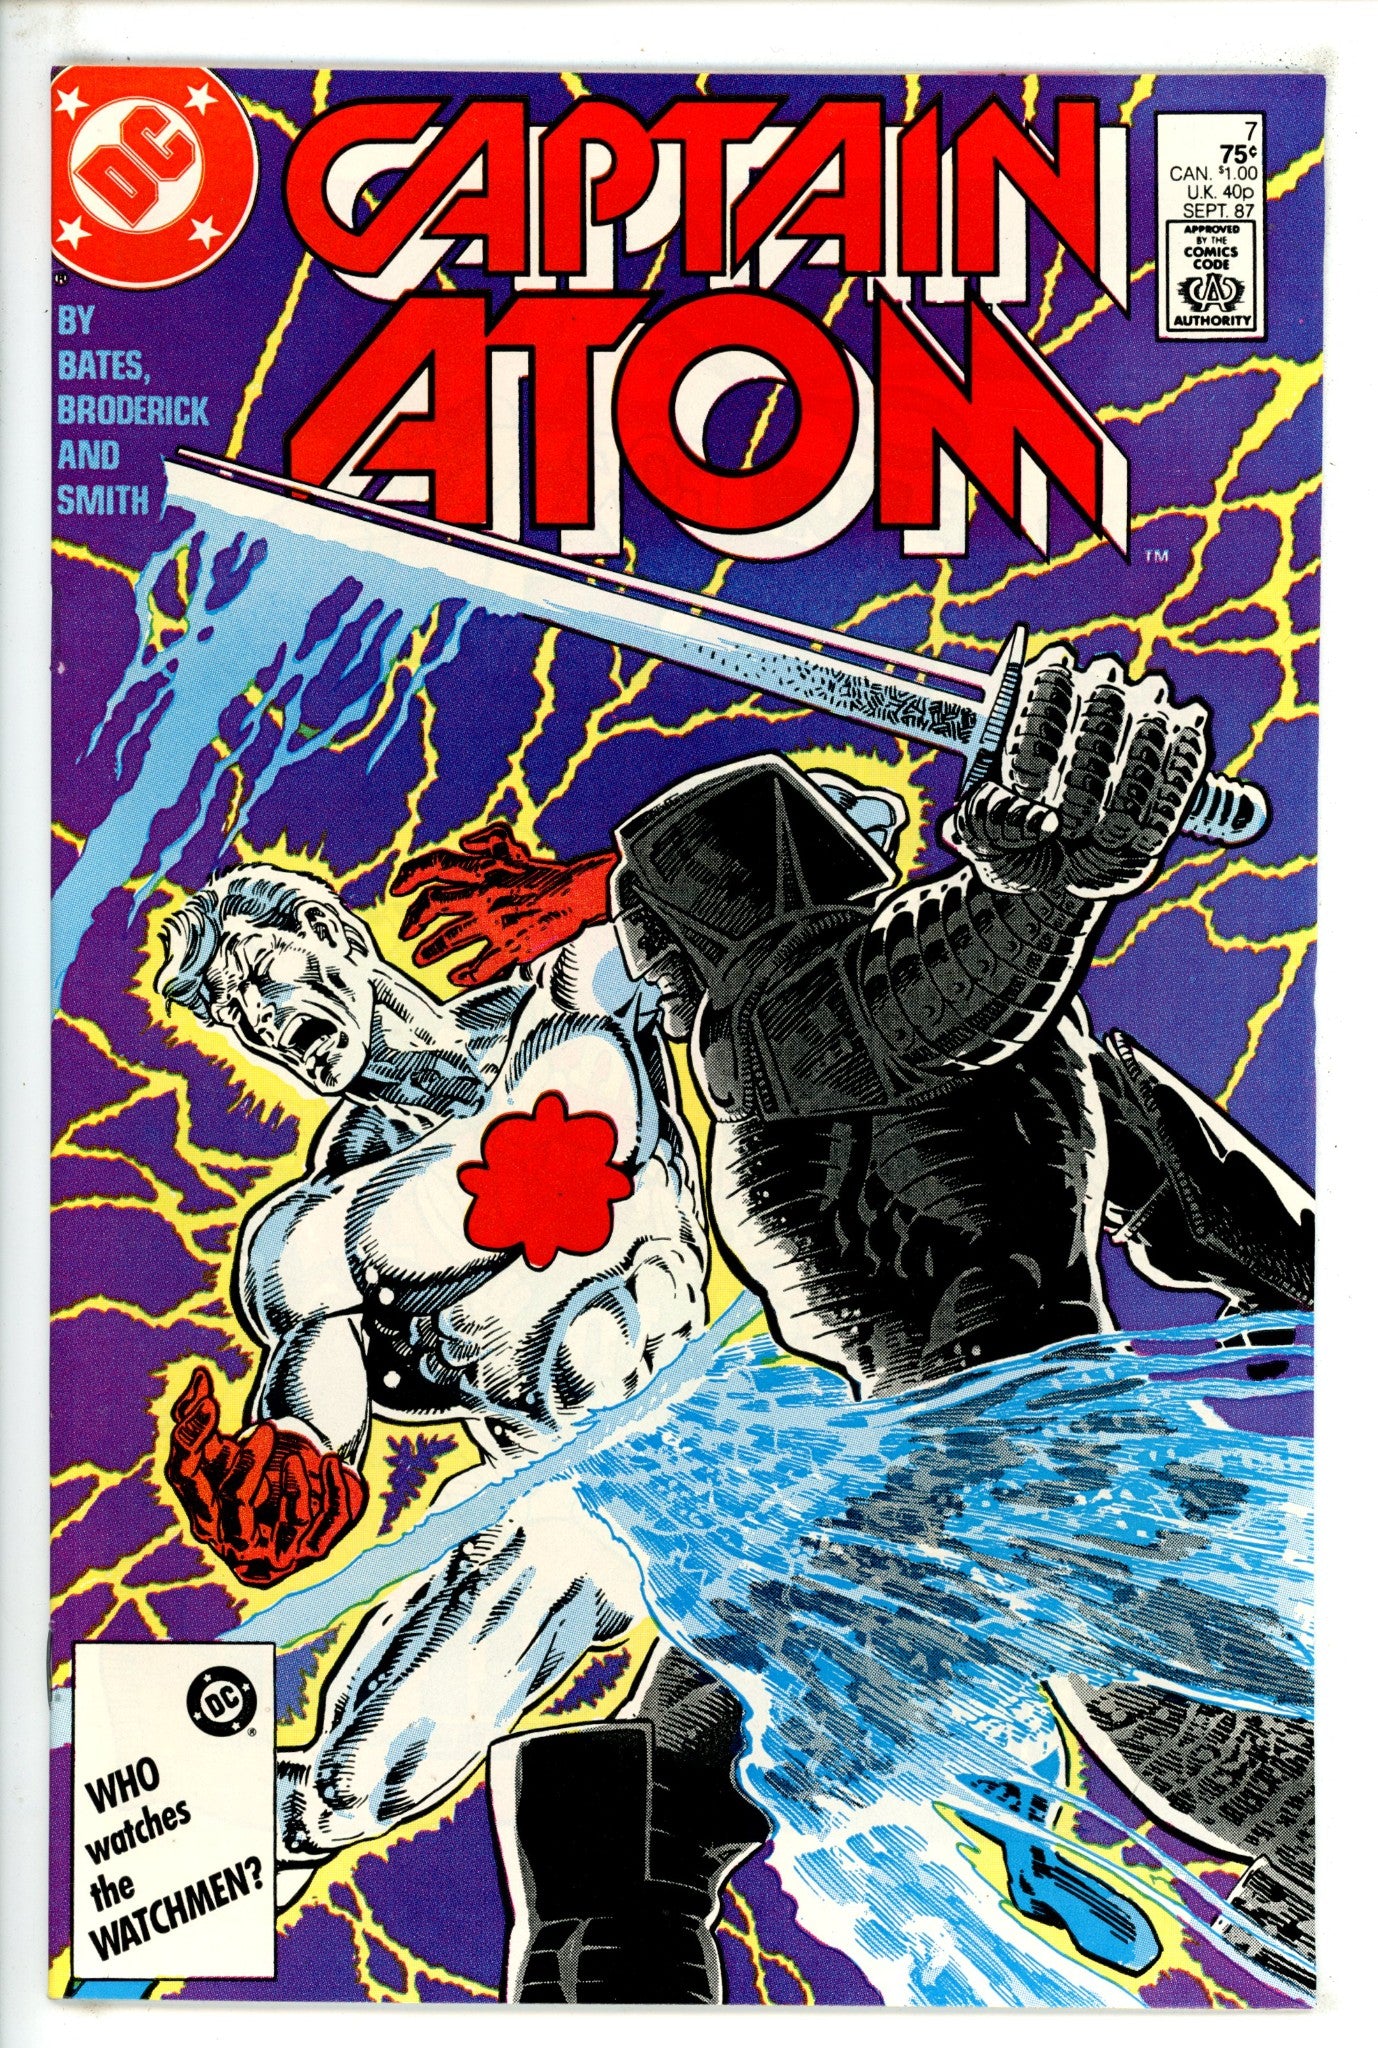 Captain Atom Vol 3 7 (1987)